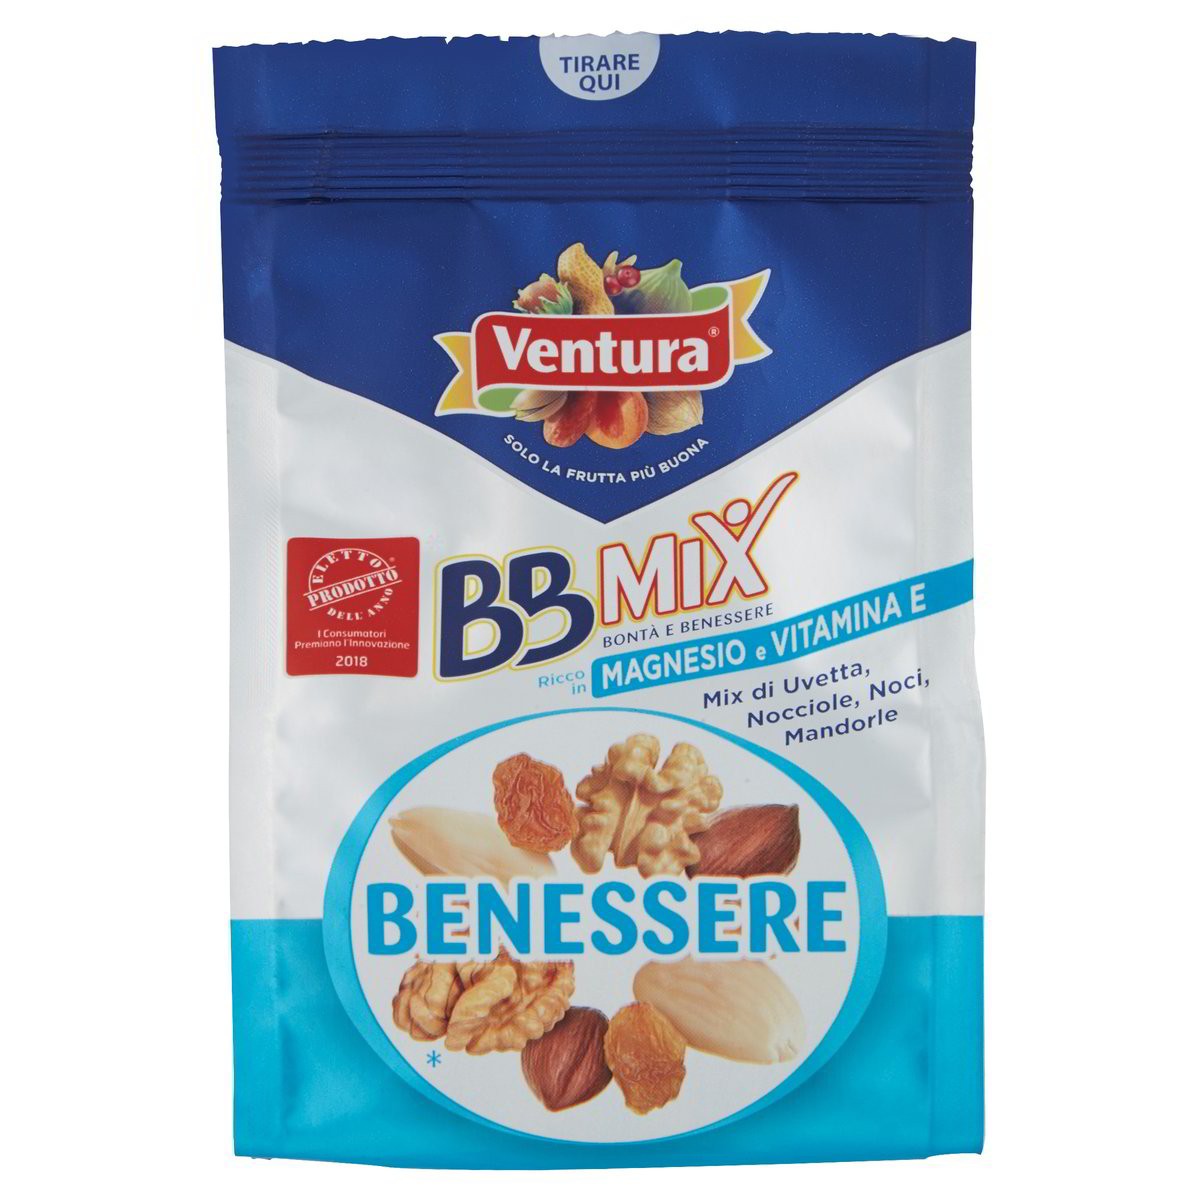 Ventura BB mix Benessere